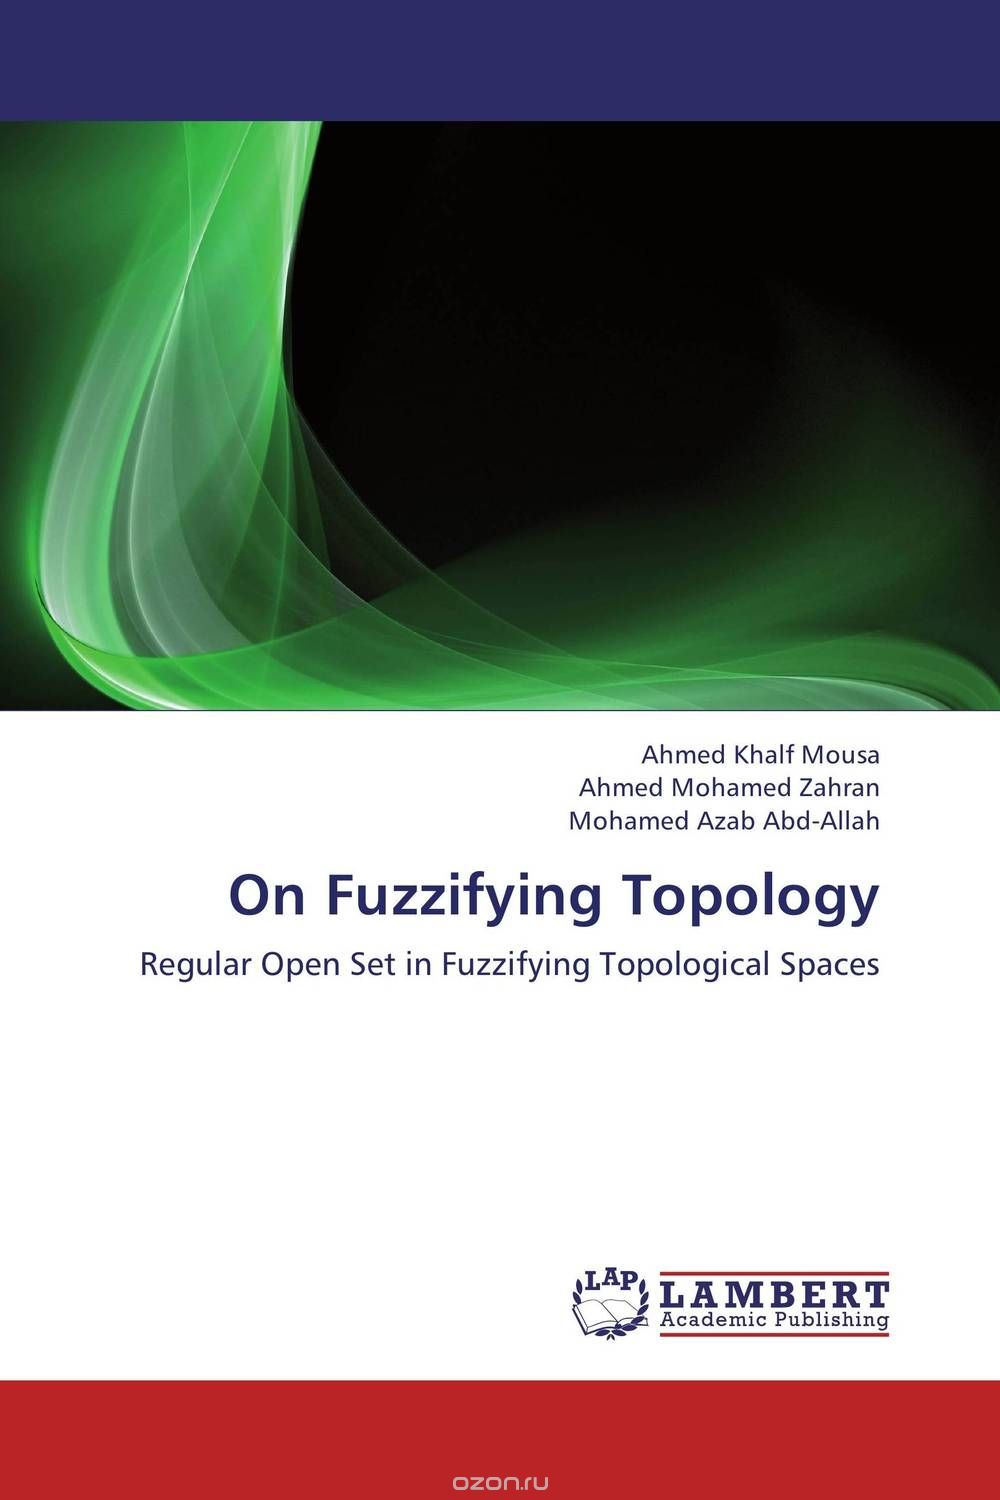 On Fuzzifying Topology